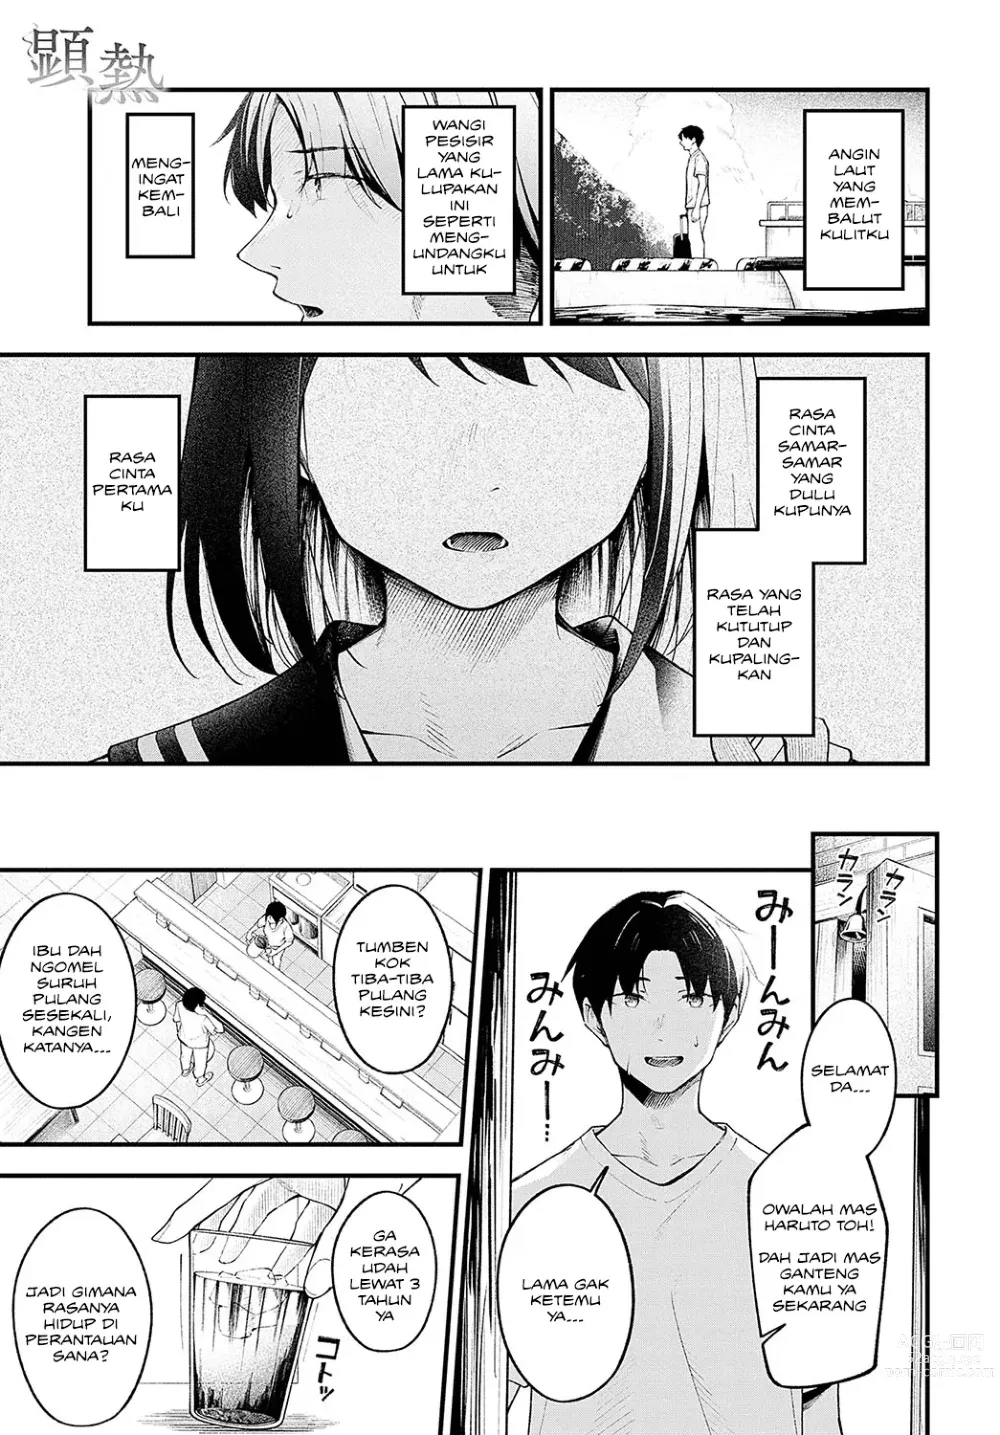 Page 1 of manga Panasnya Pas